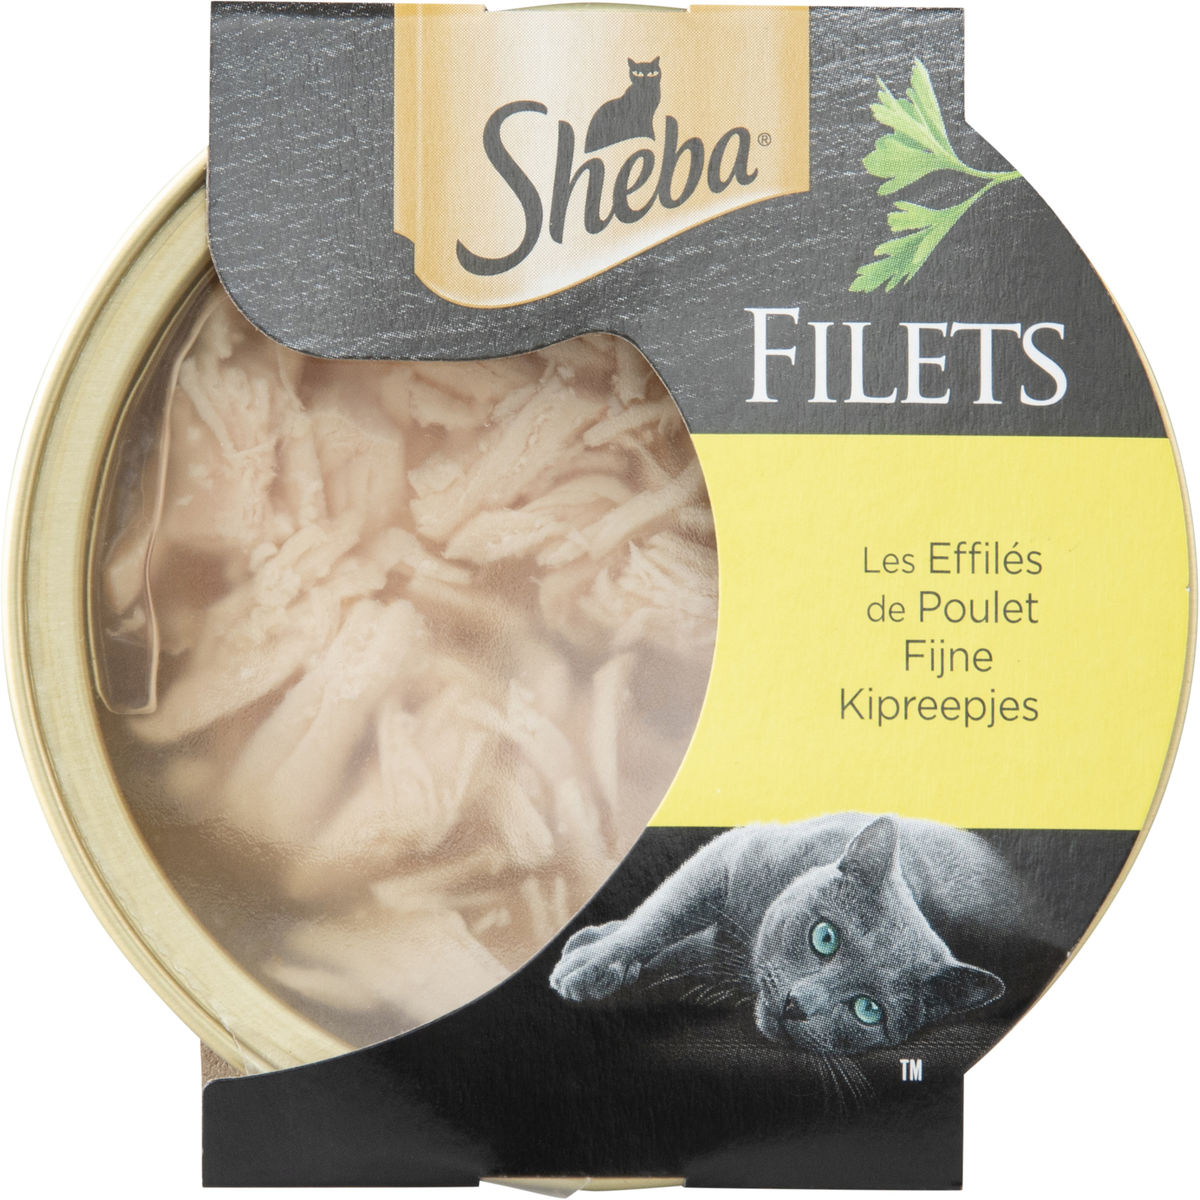 Sheba Filets Fijne Kipreepjes 60 g